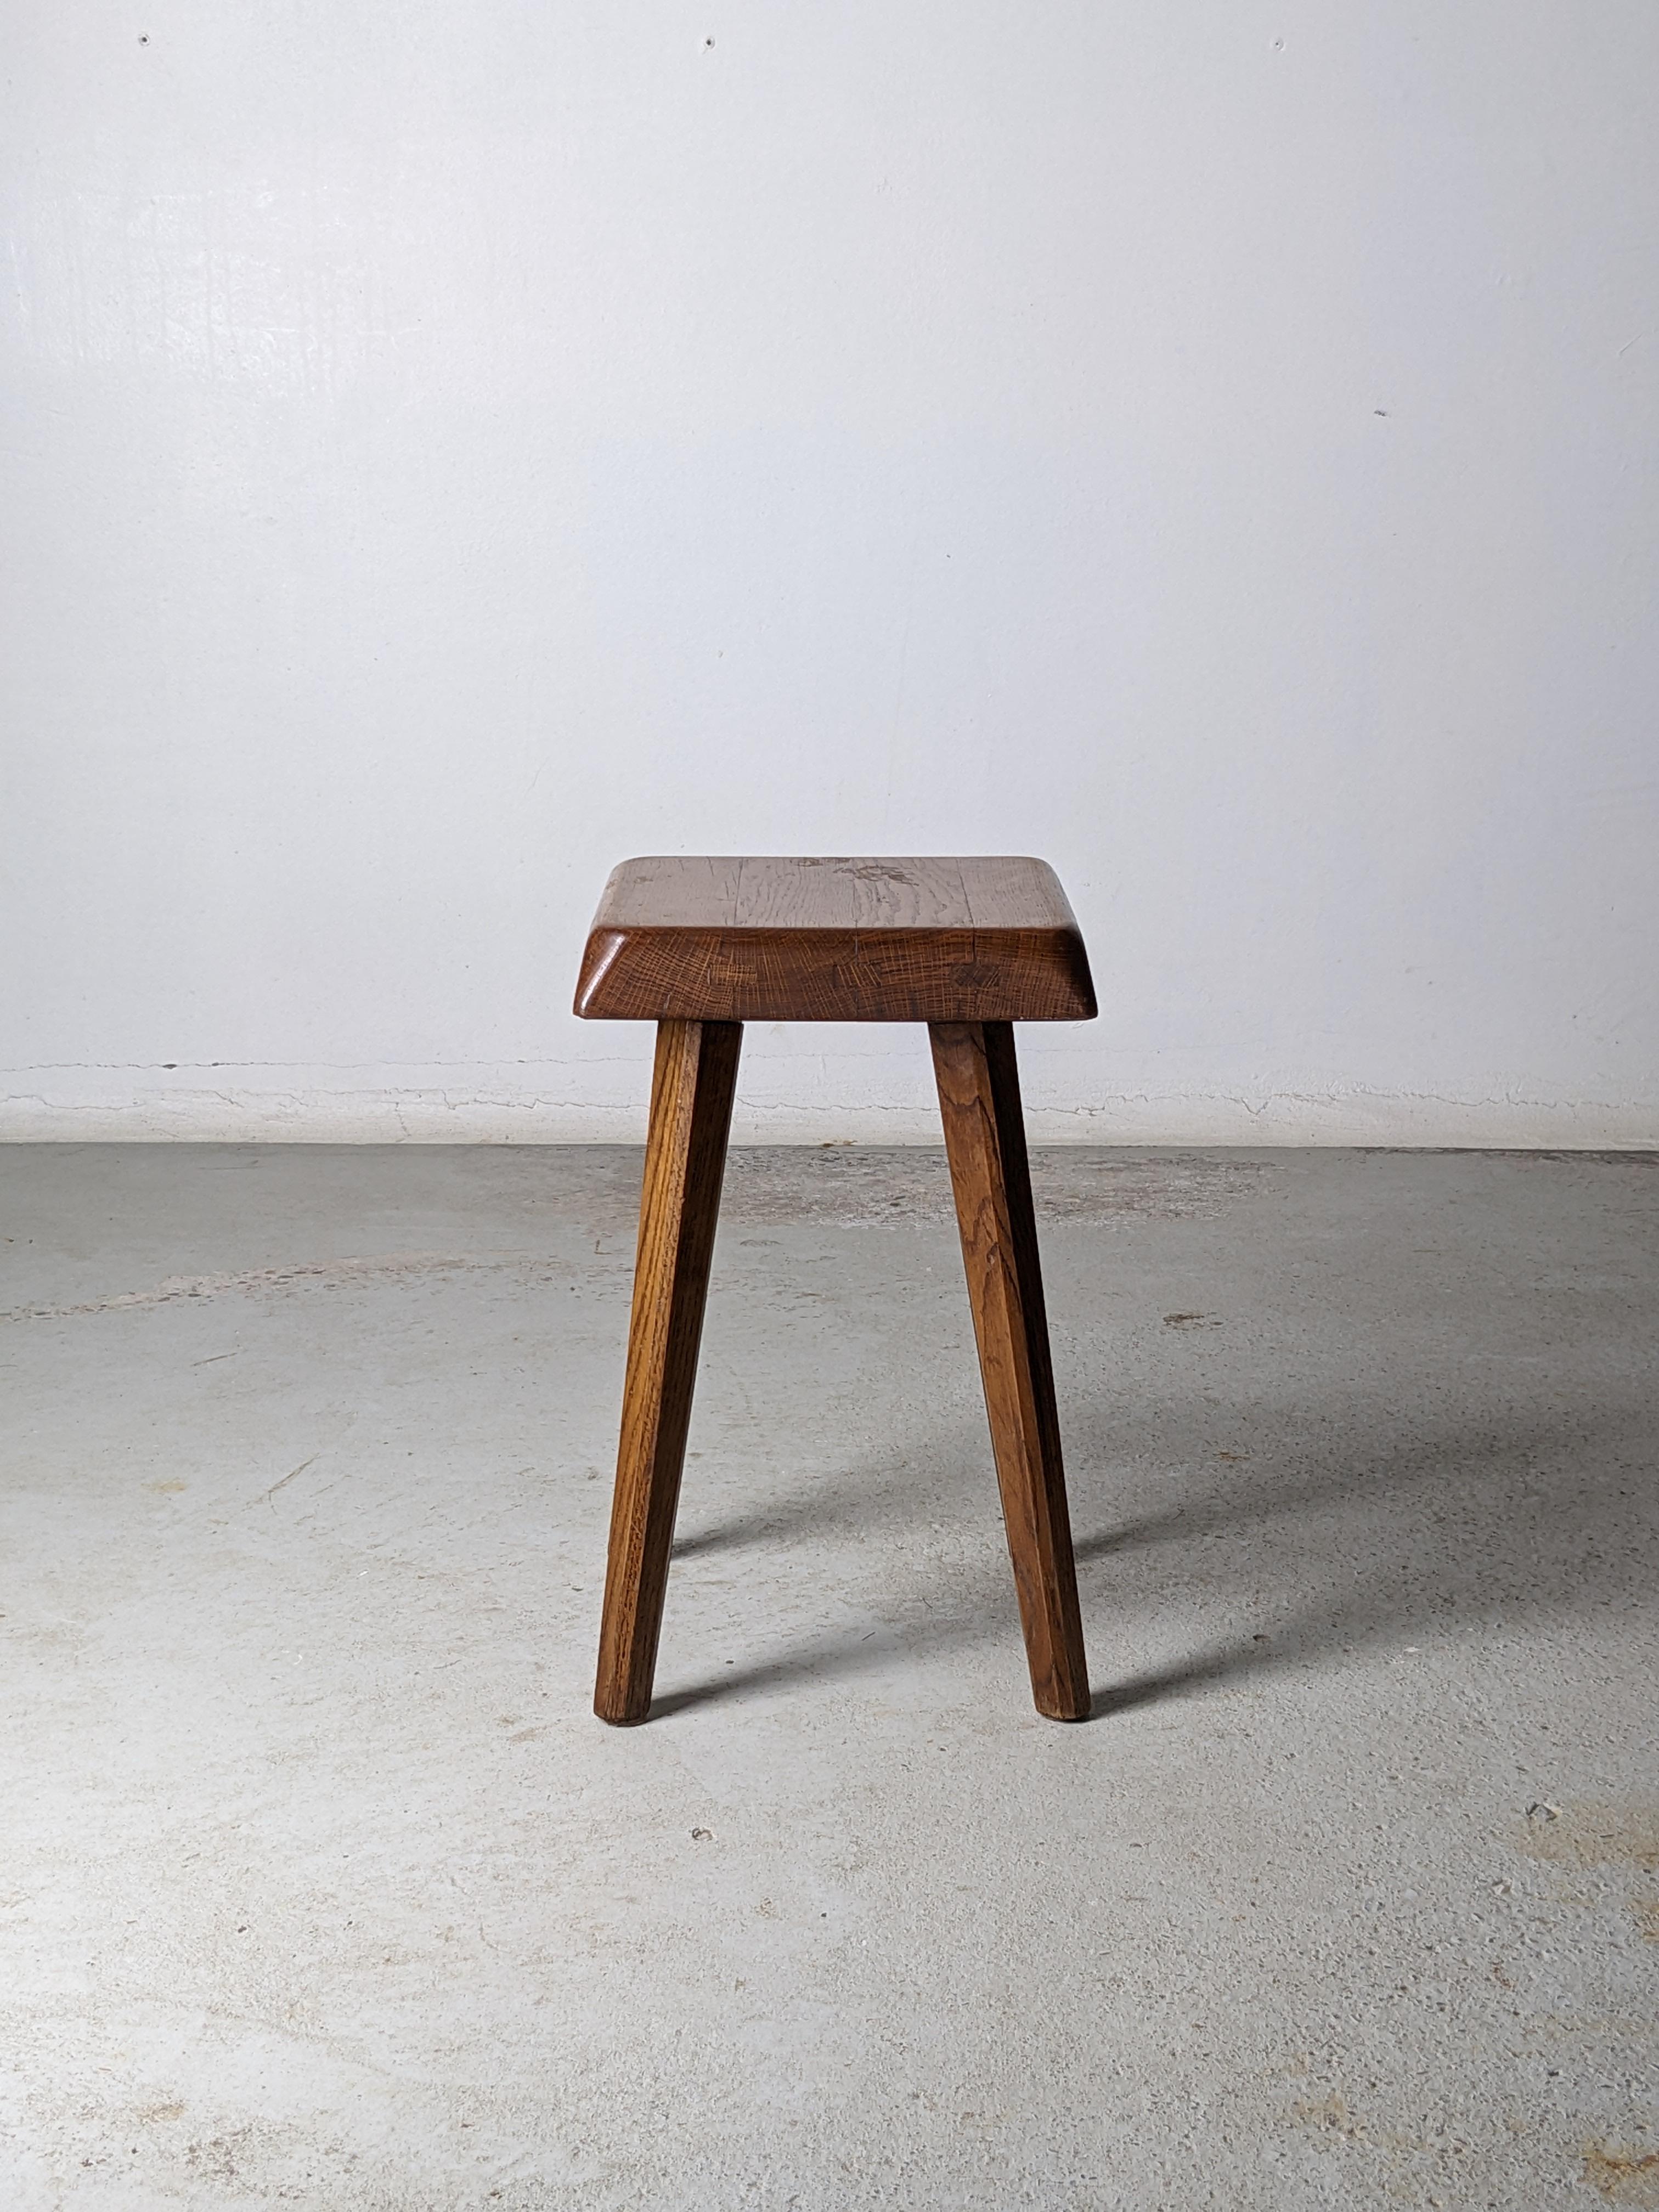 Pierre Chapo four legged wood stool.
Model S01A (